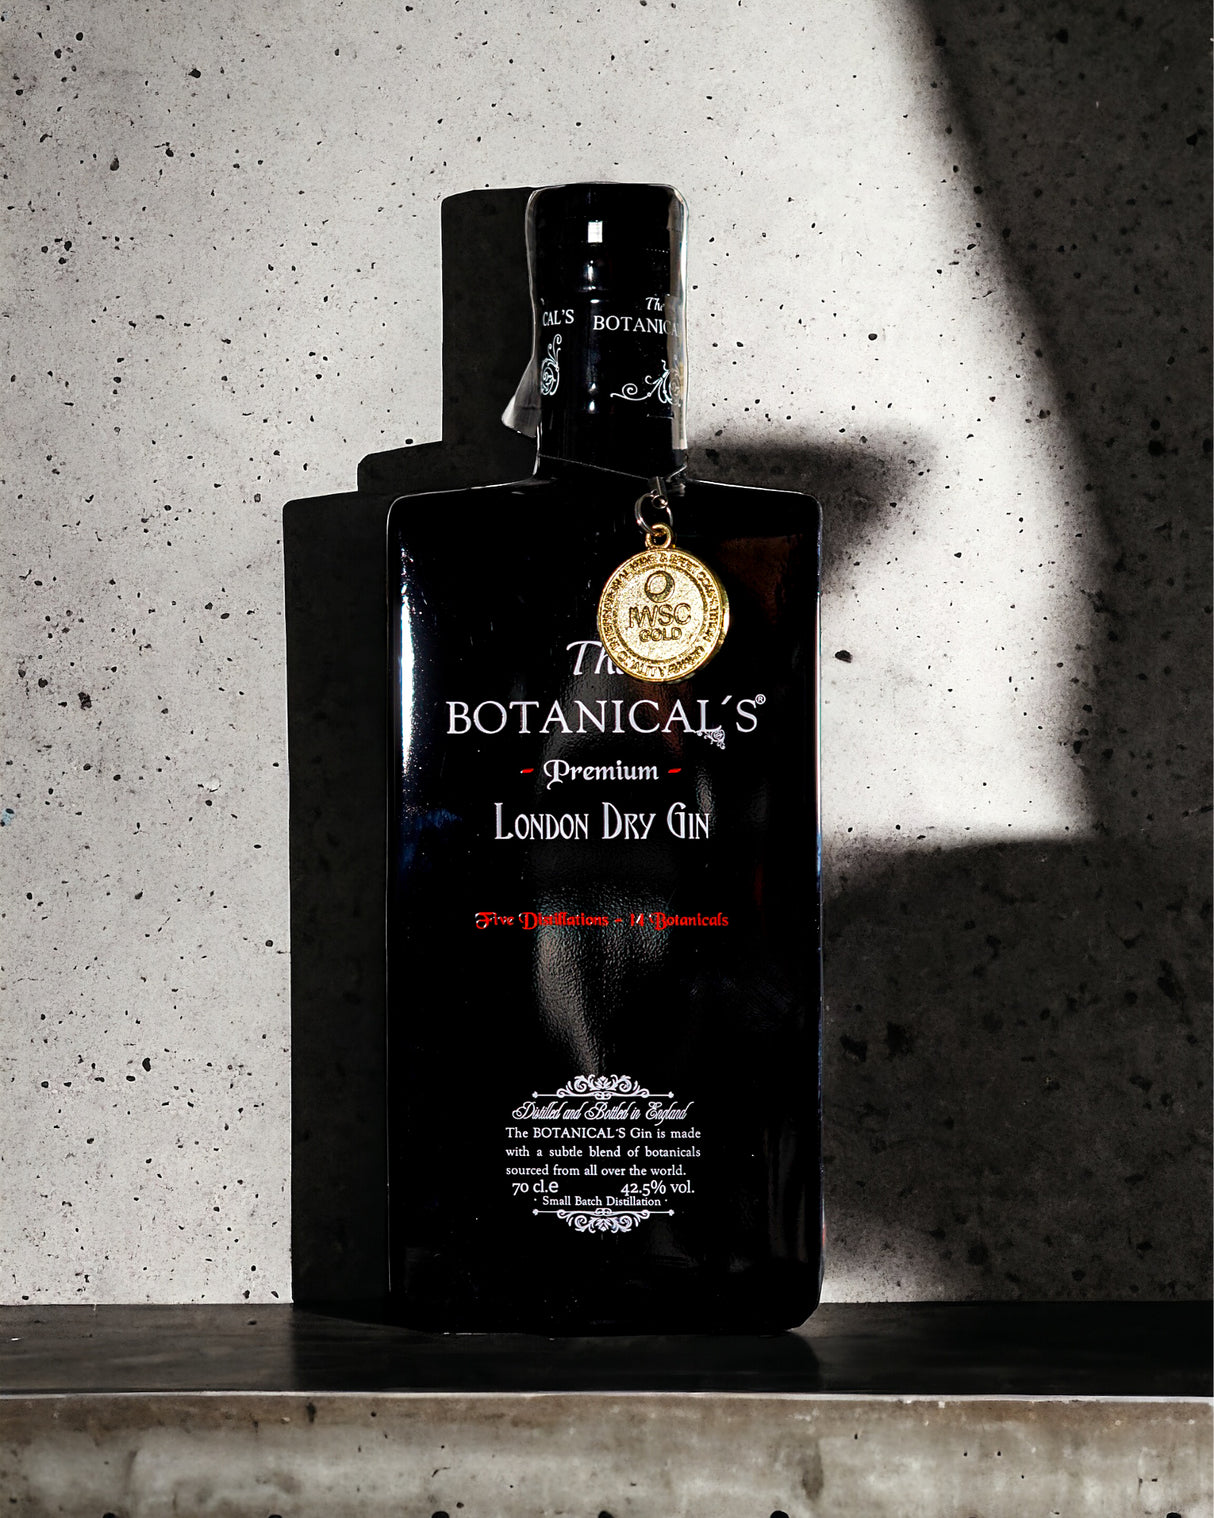 The Botanical's Premium London Dry Gin